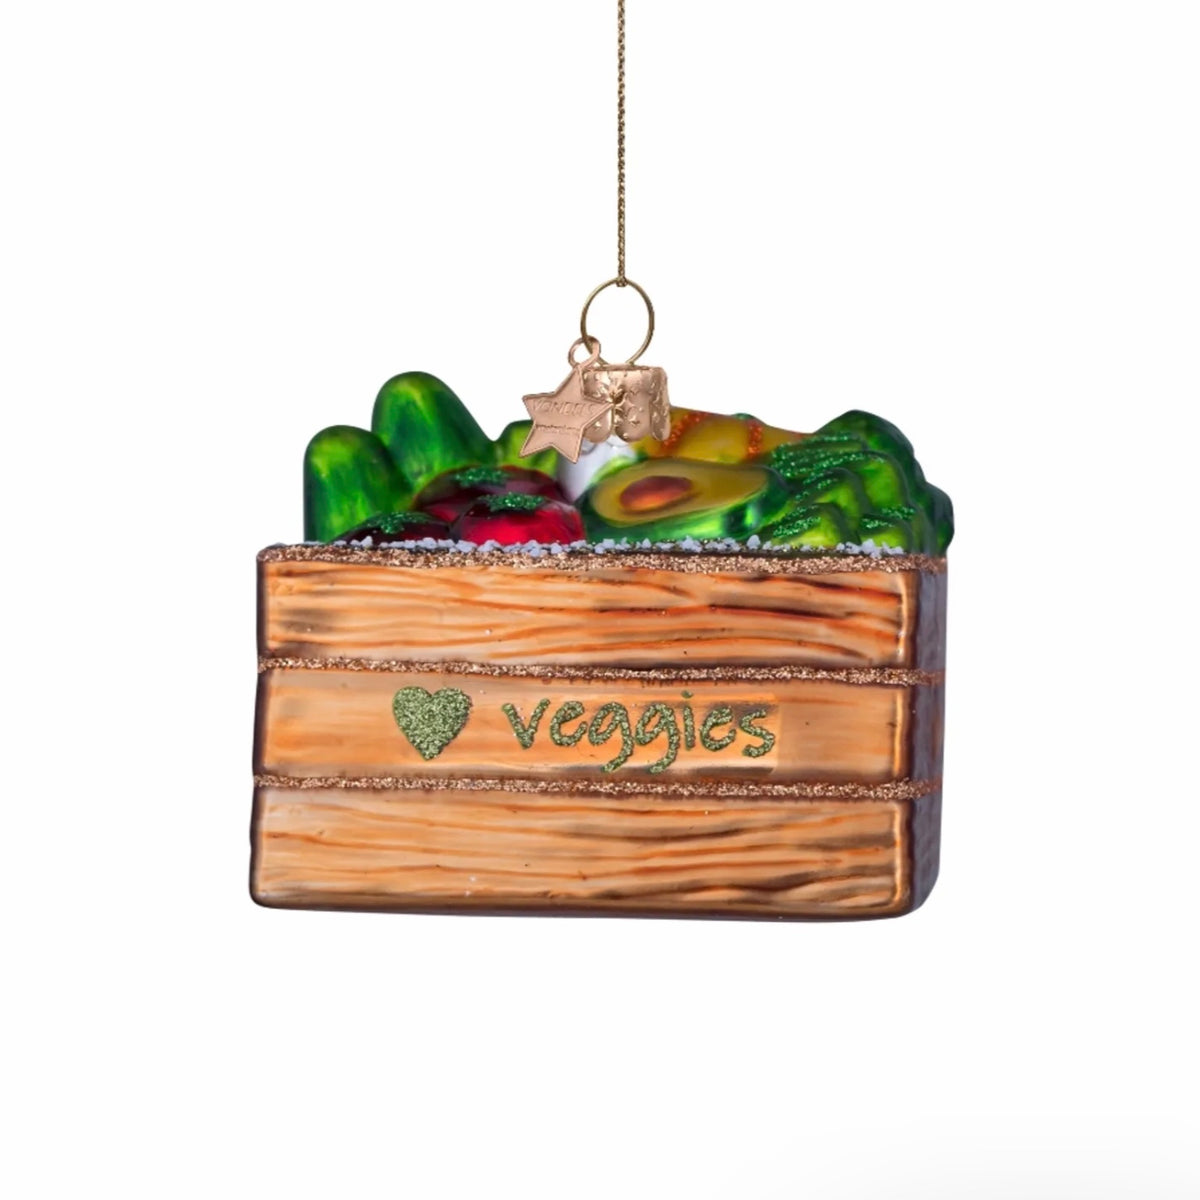 Vegetable Box Glass Ornament, VONDELS - RSVP Style